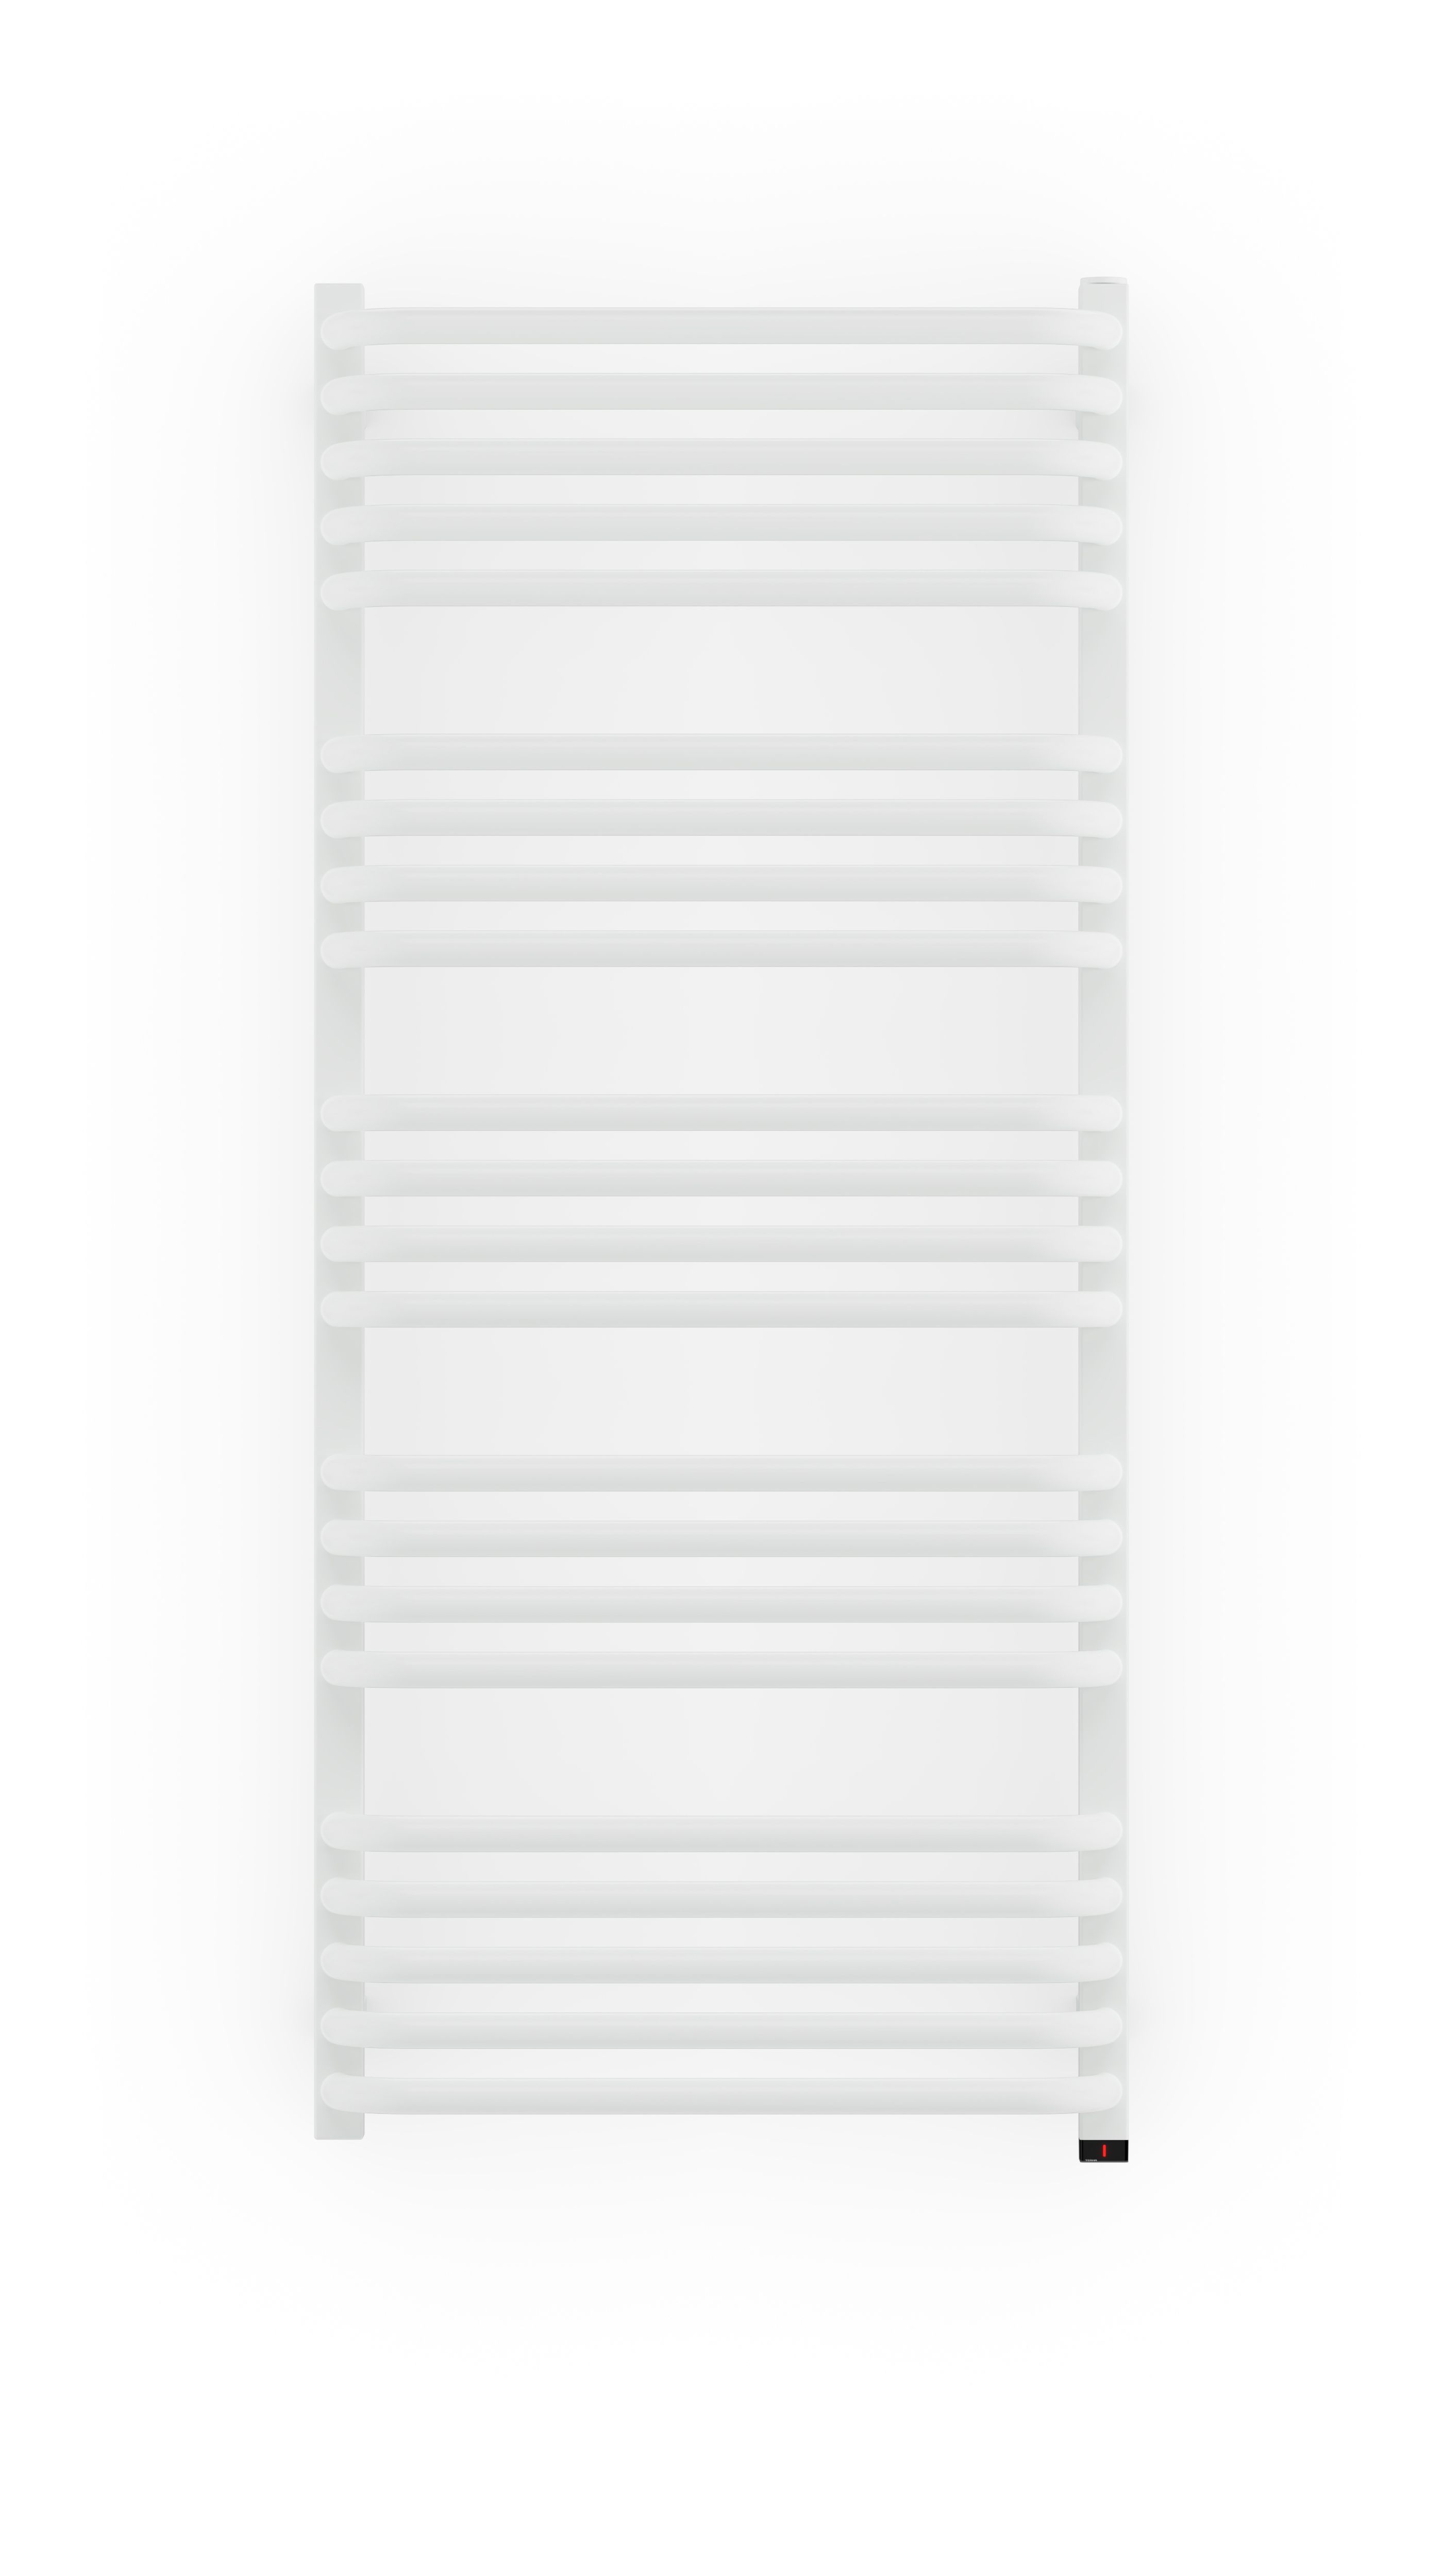 Terma Alex White Towel warmer (W)500mm x (H)1140mm